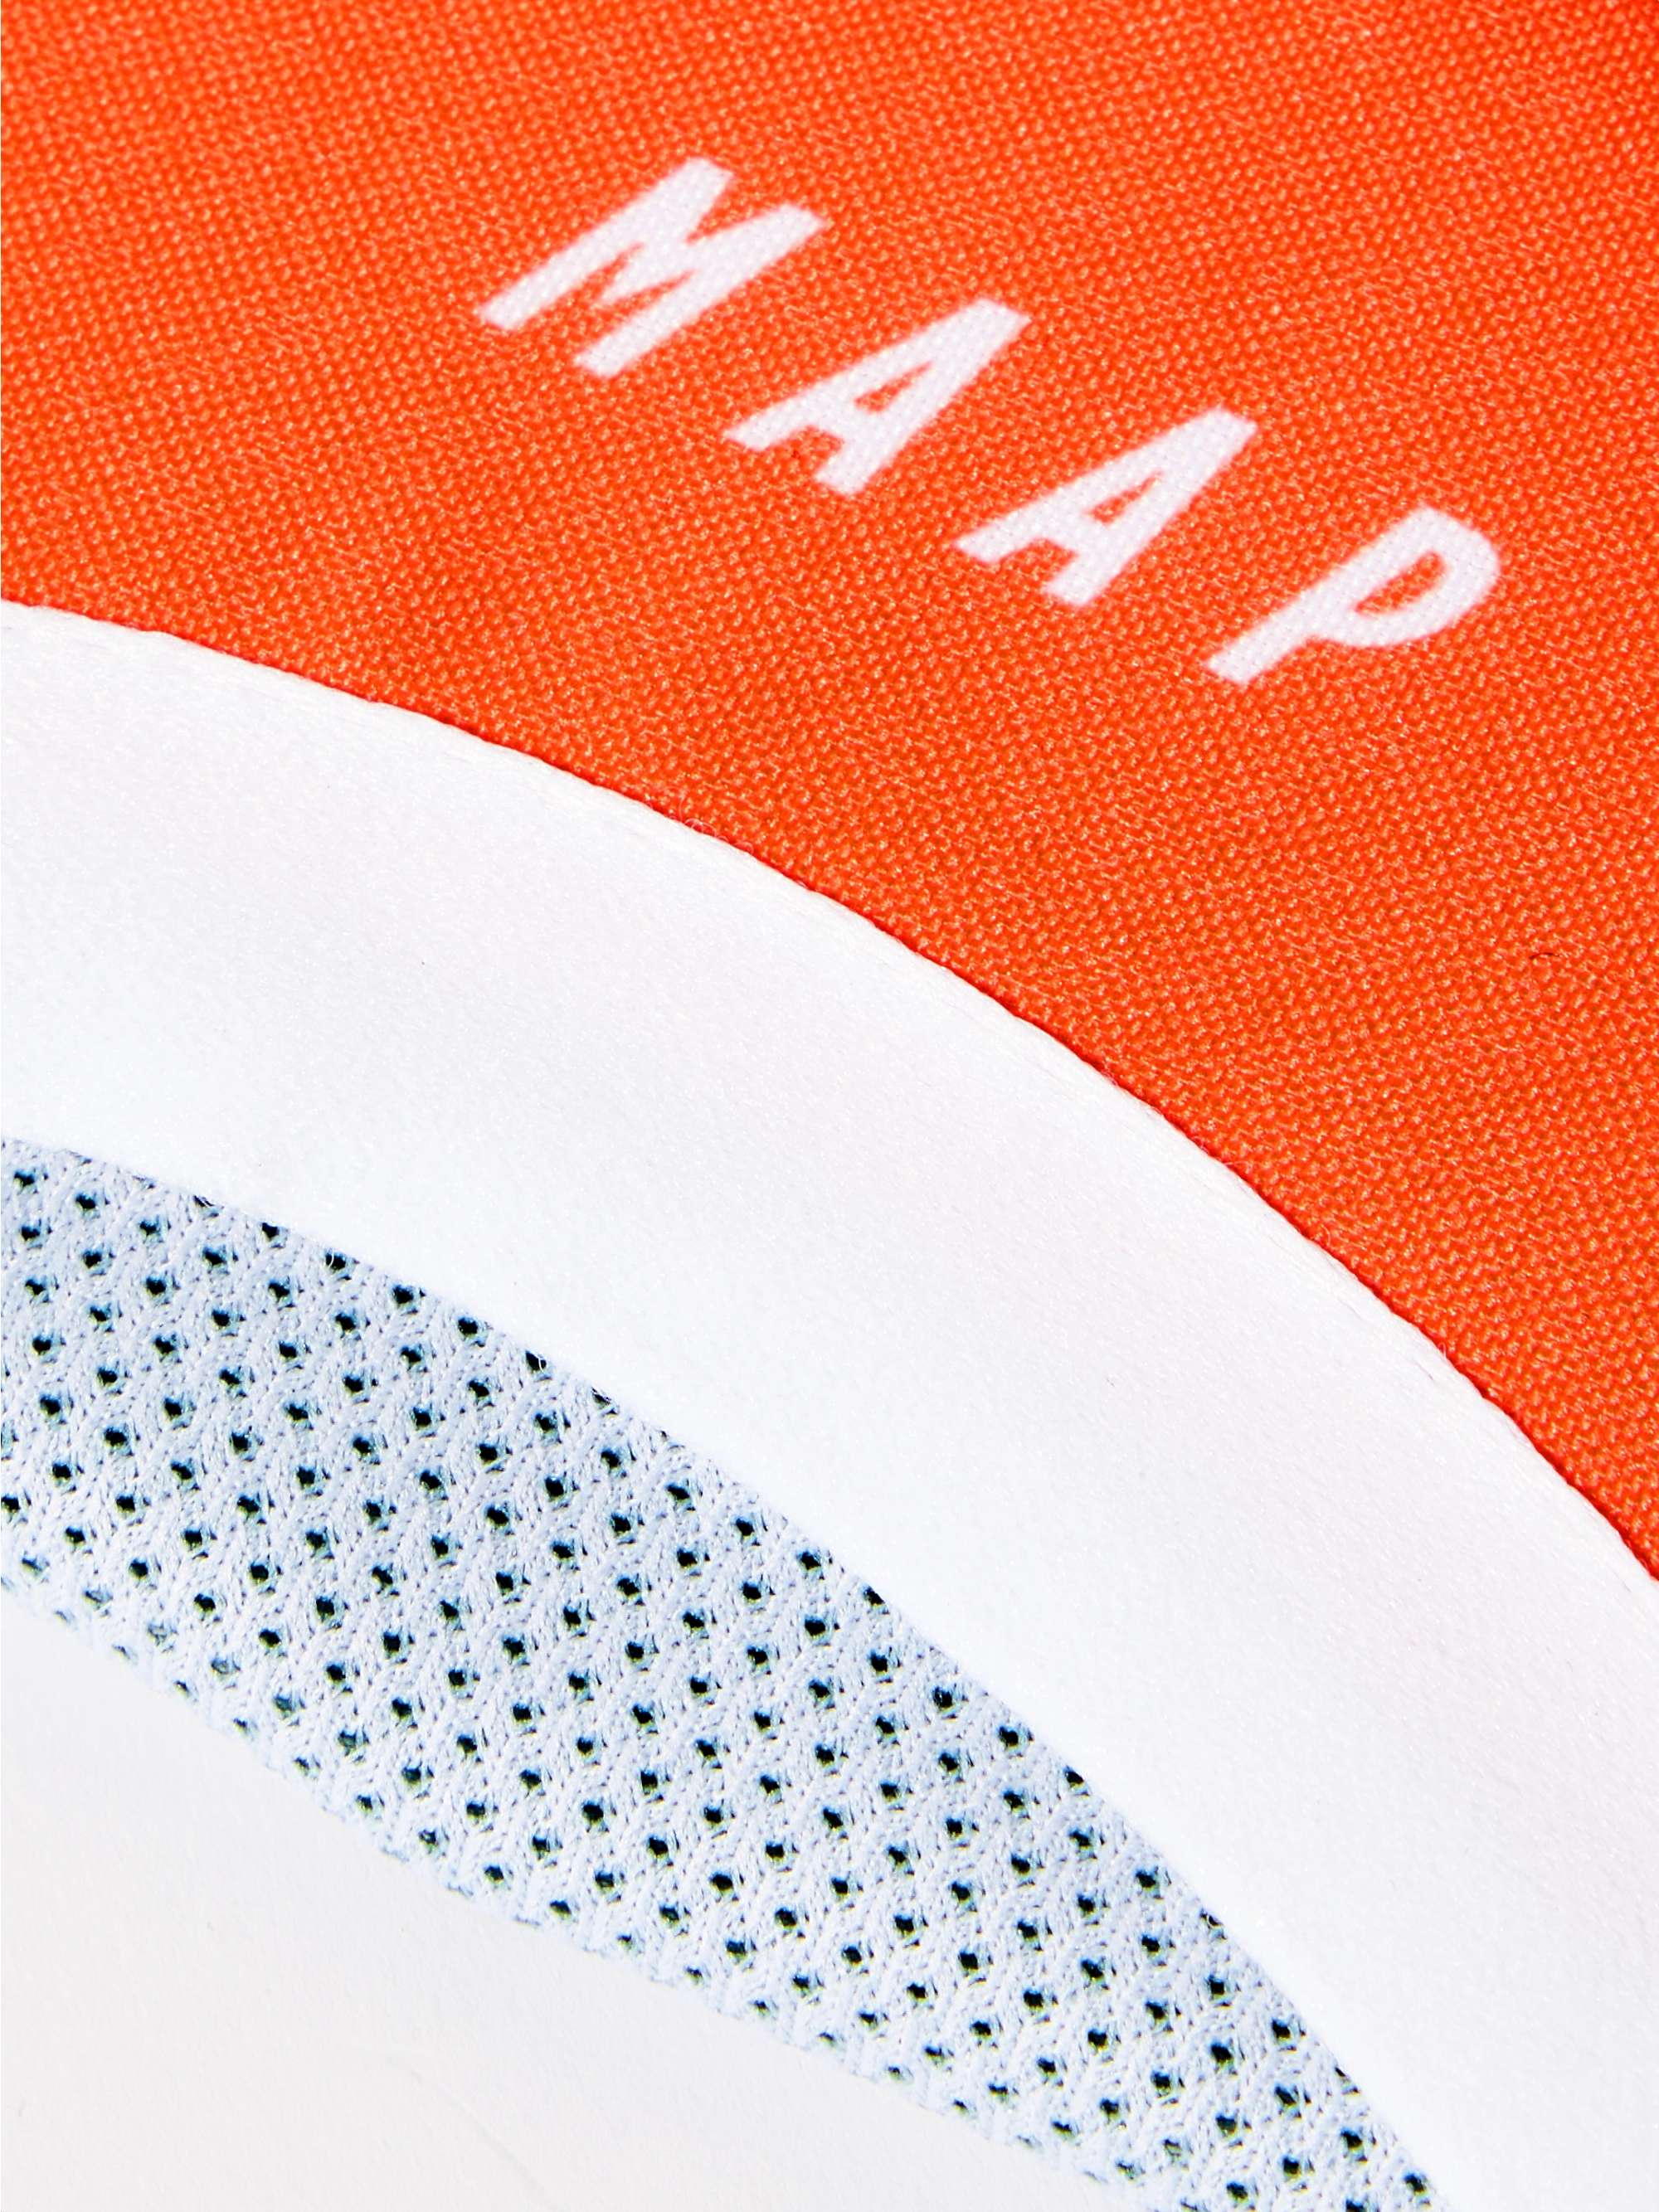 MAAP Voyage Logo-Print Colour-Block Cotton-Mesh Cycling Cap